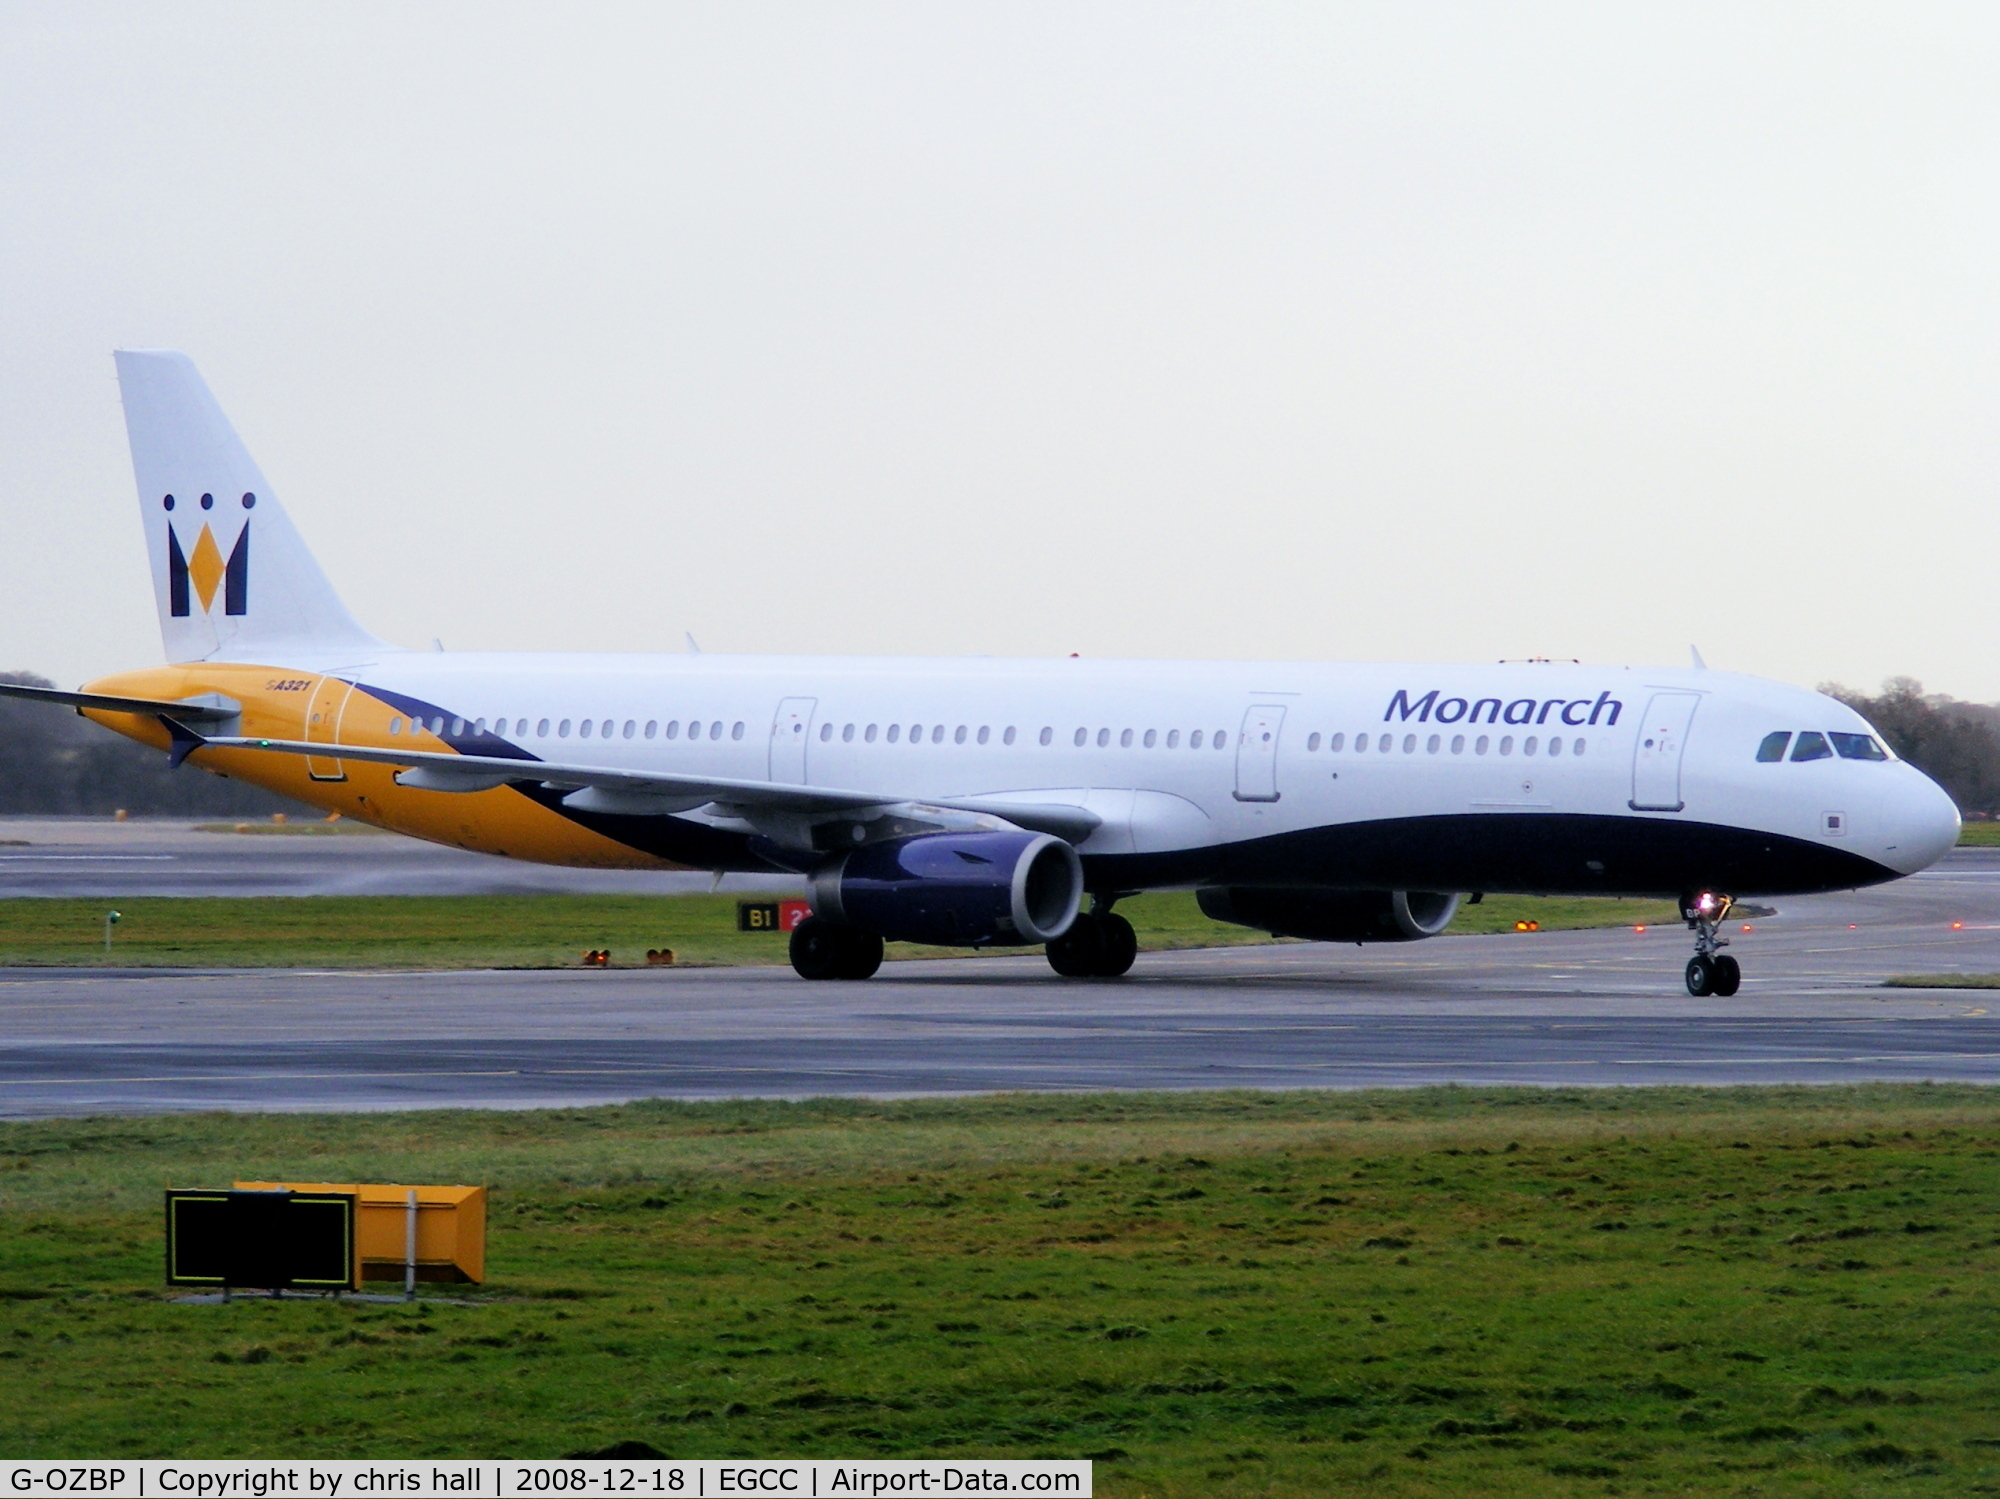 G-OZBP, 2001 Airbus A321-231 C/N 1433, Monarch